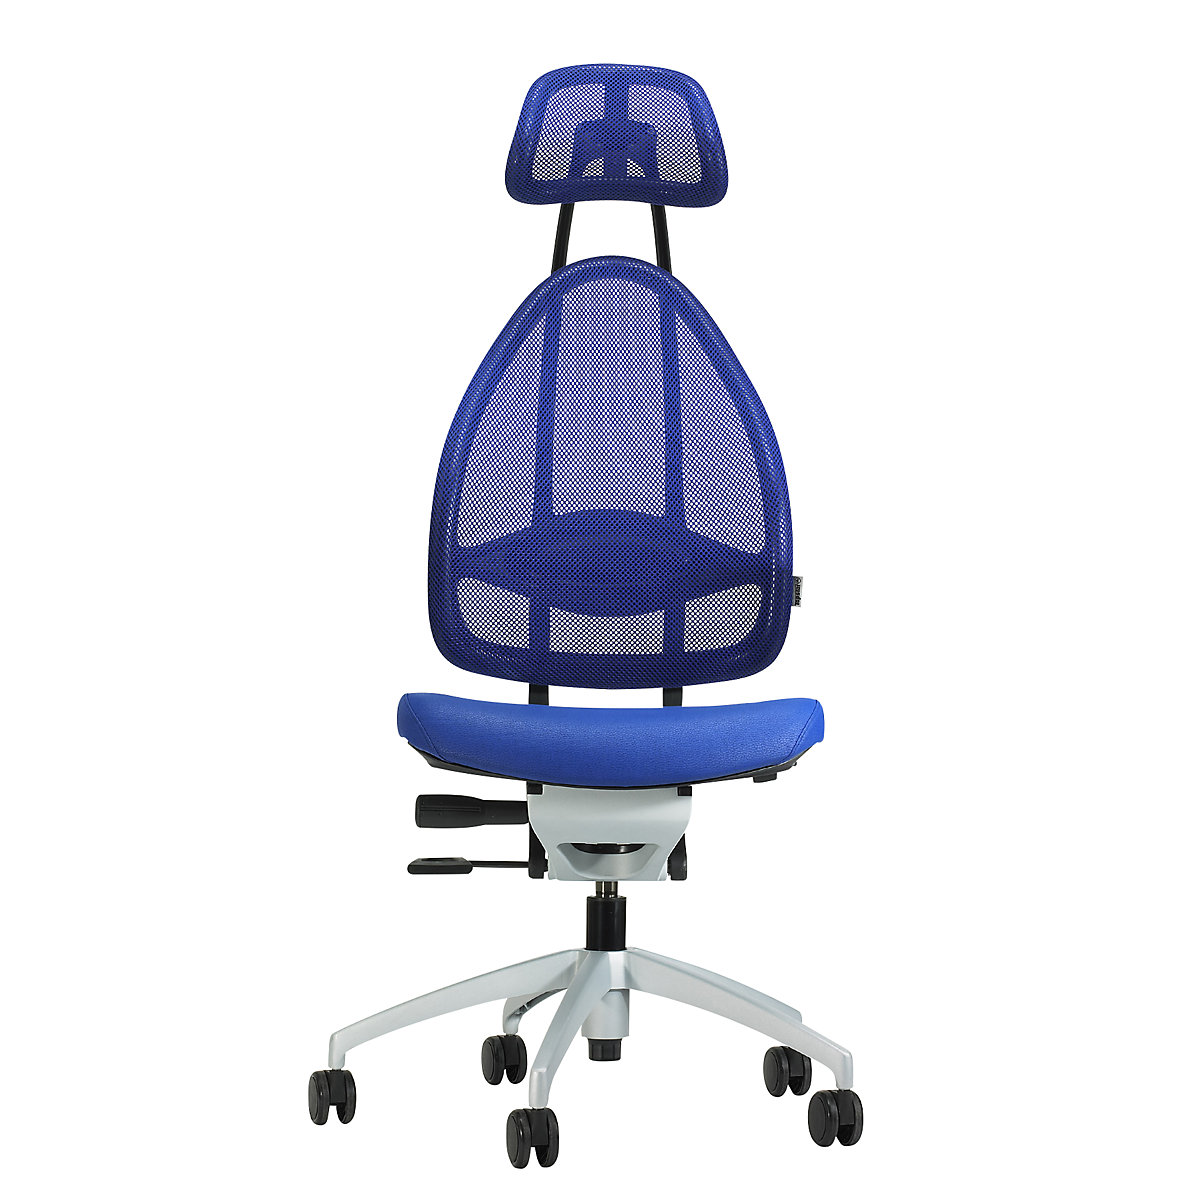 Dizajnová kancelárska otočná stolička s opierkou hlavy a sieťkovým operadlom – Topstar, celková výška operadla 830 mm, kráľovská modrá-4